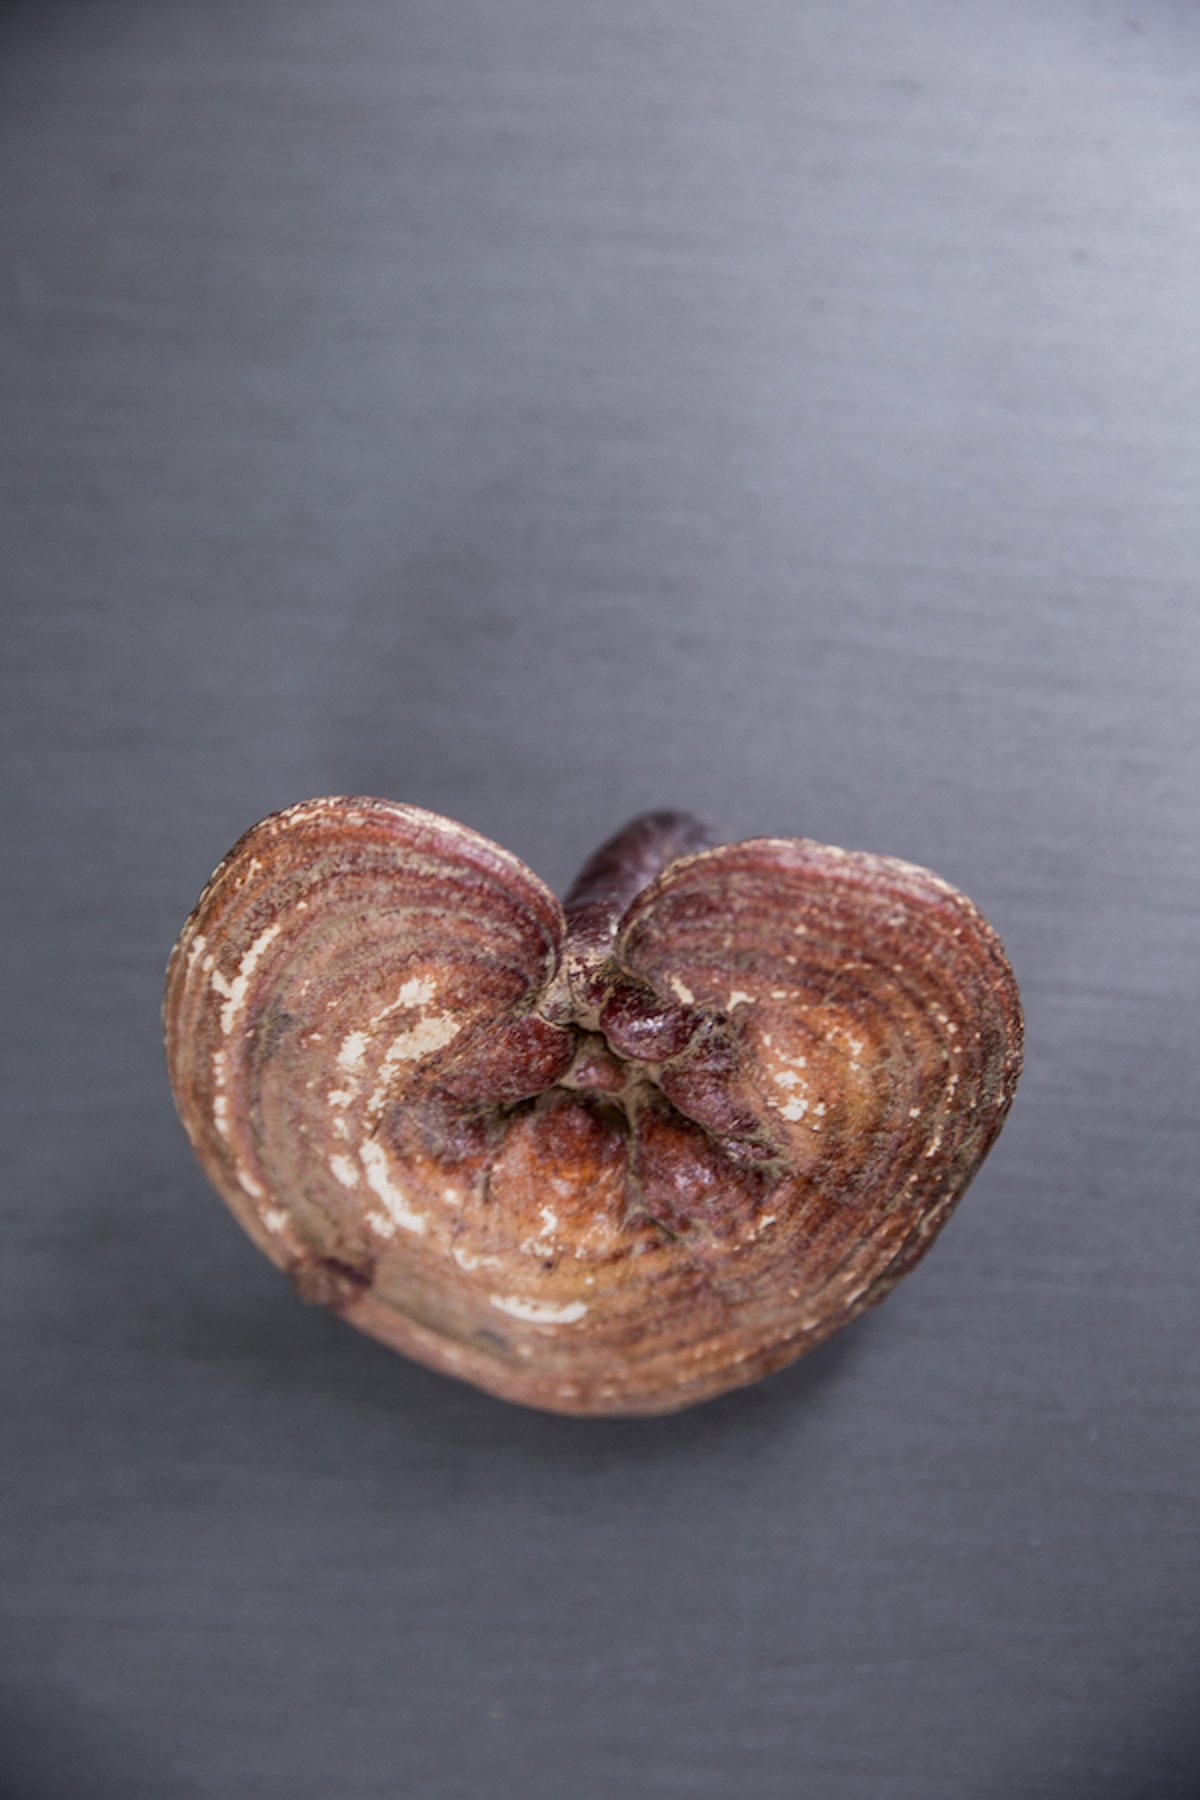 Whole, dried reishi (<i >Ganoderma lucidum</i>) mushroom cap